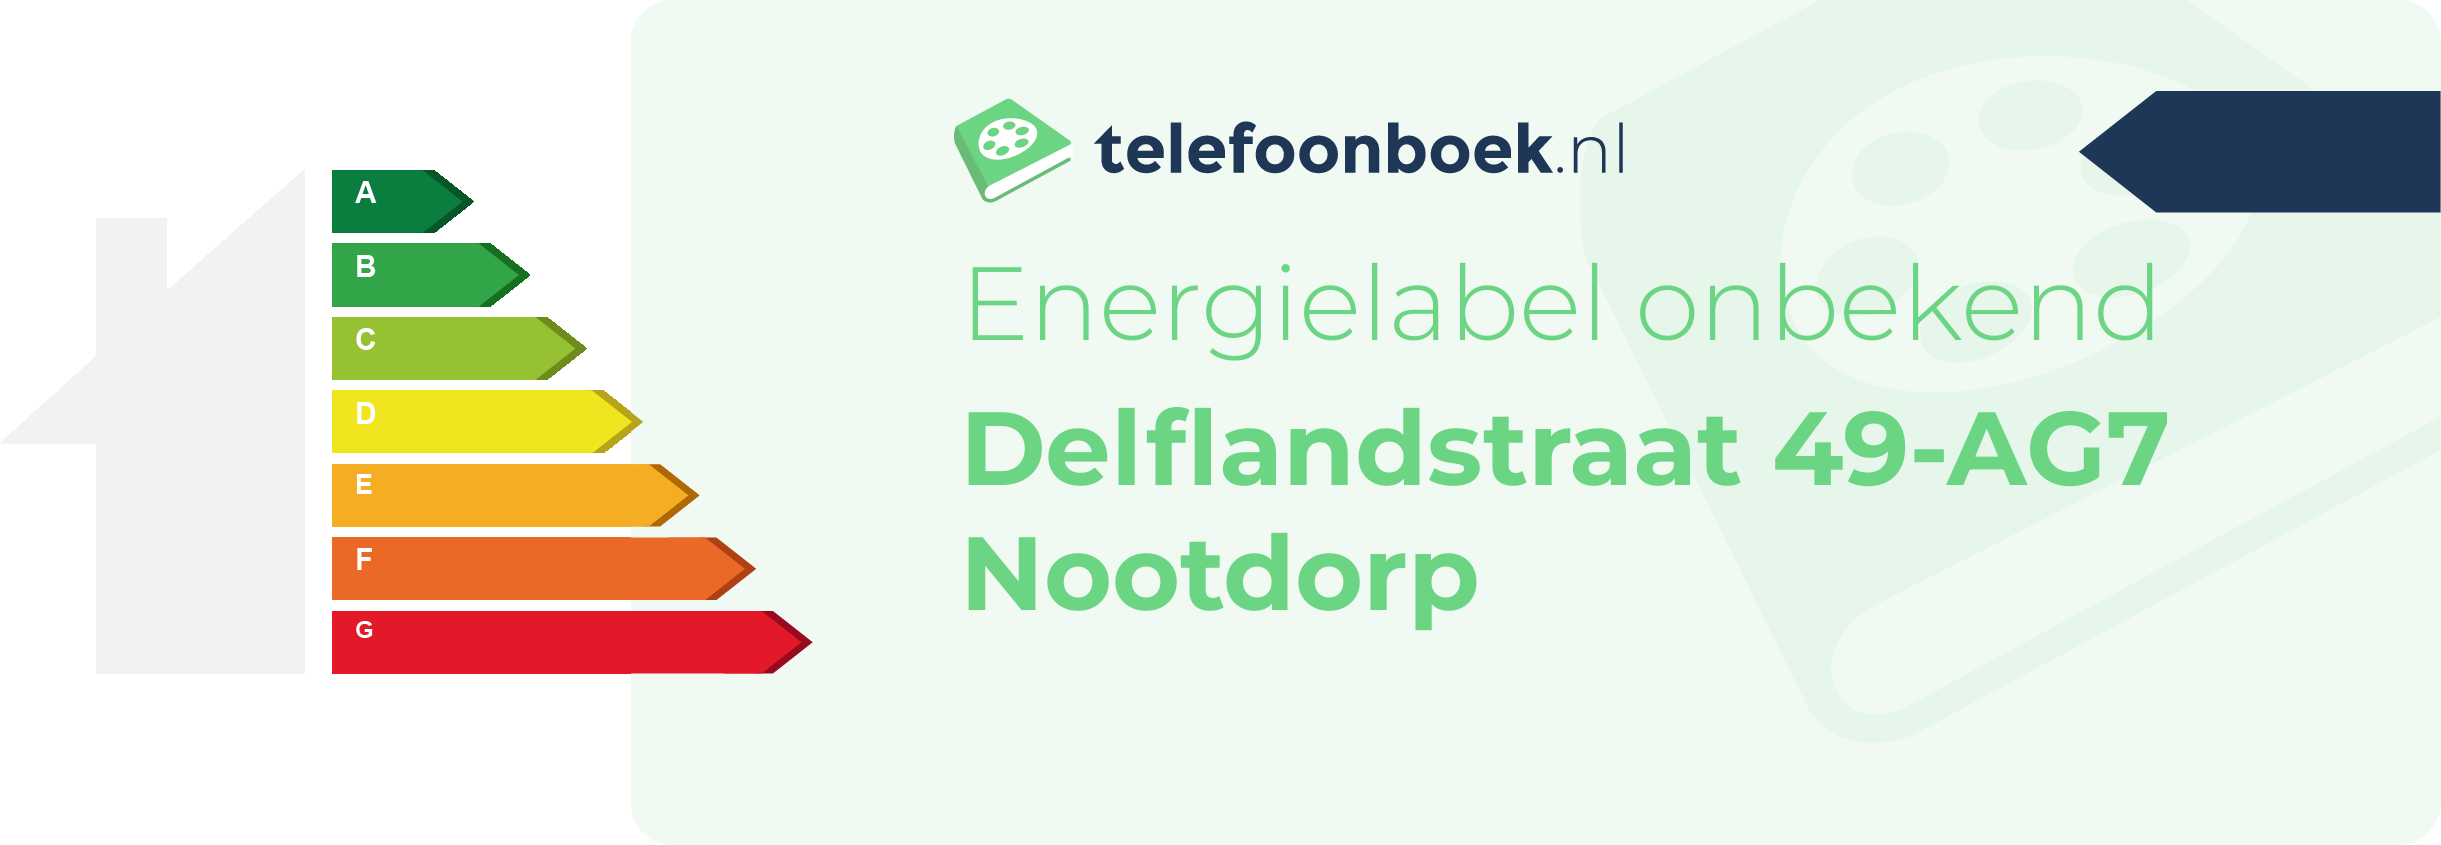 Energielabel Delflandstraat 49-AG7 Nootdorp